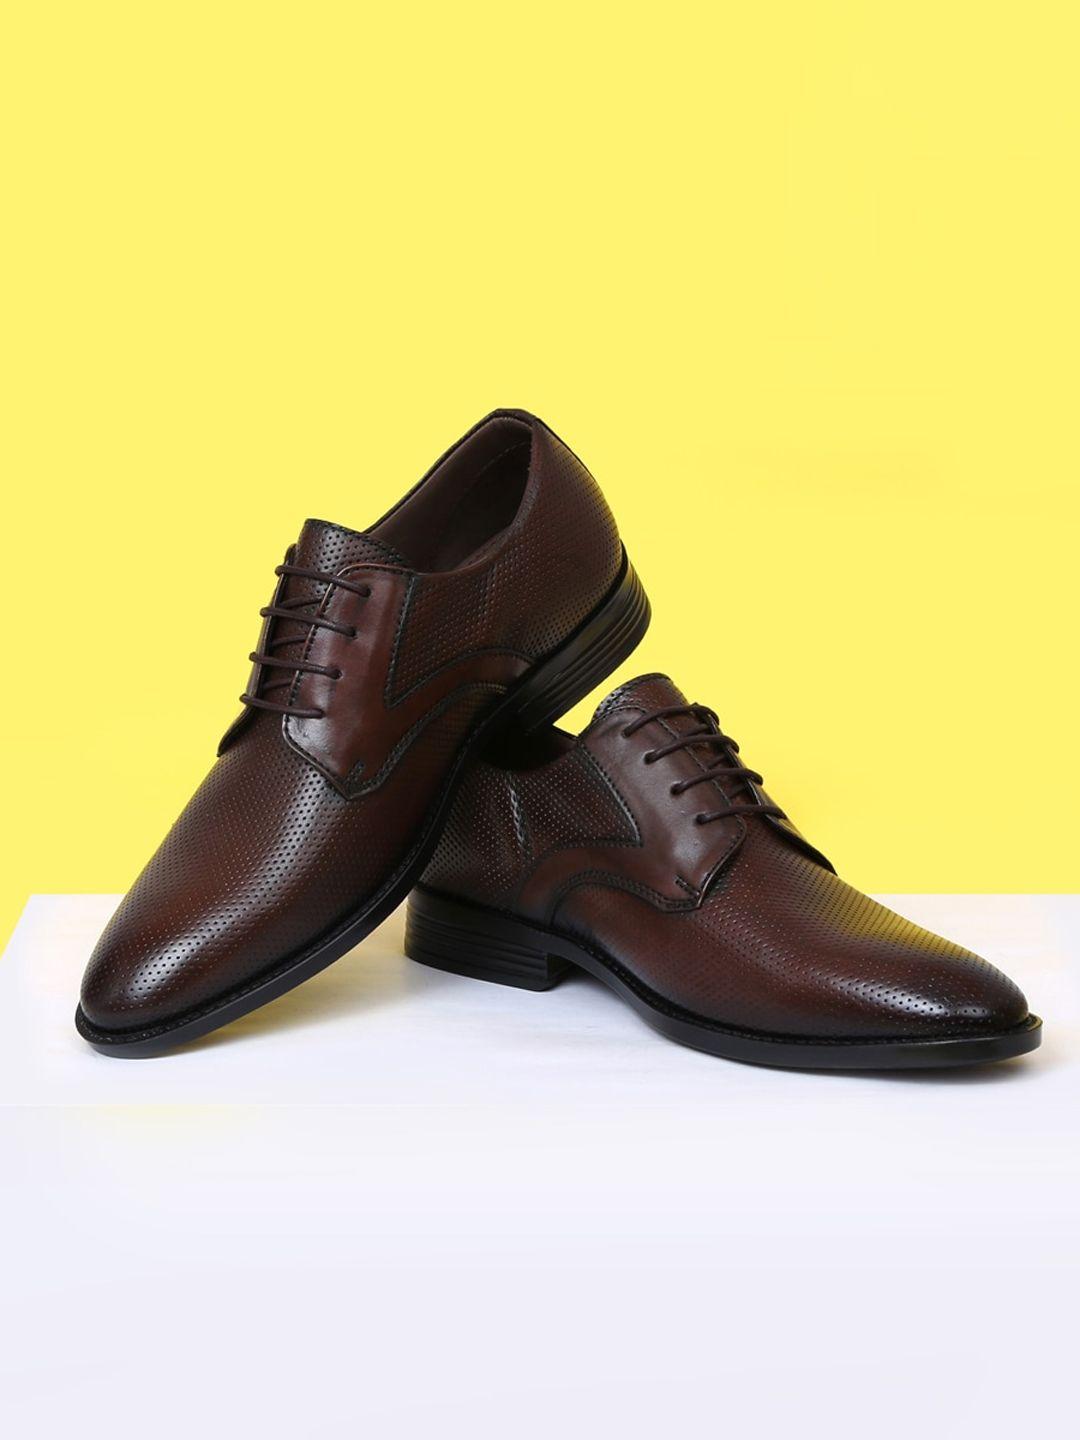 zoom shoes men textured leather formal derbys